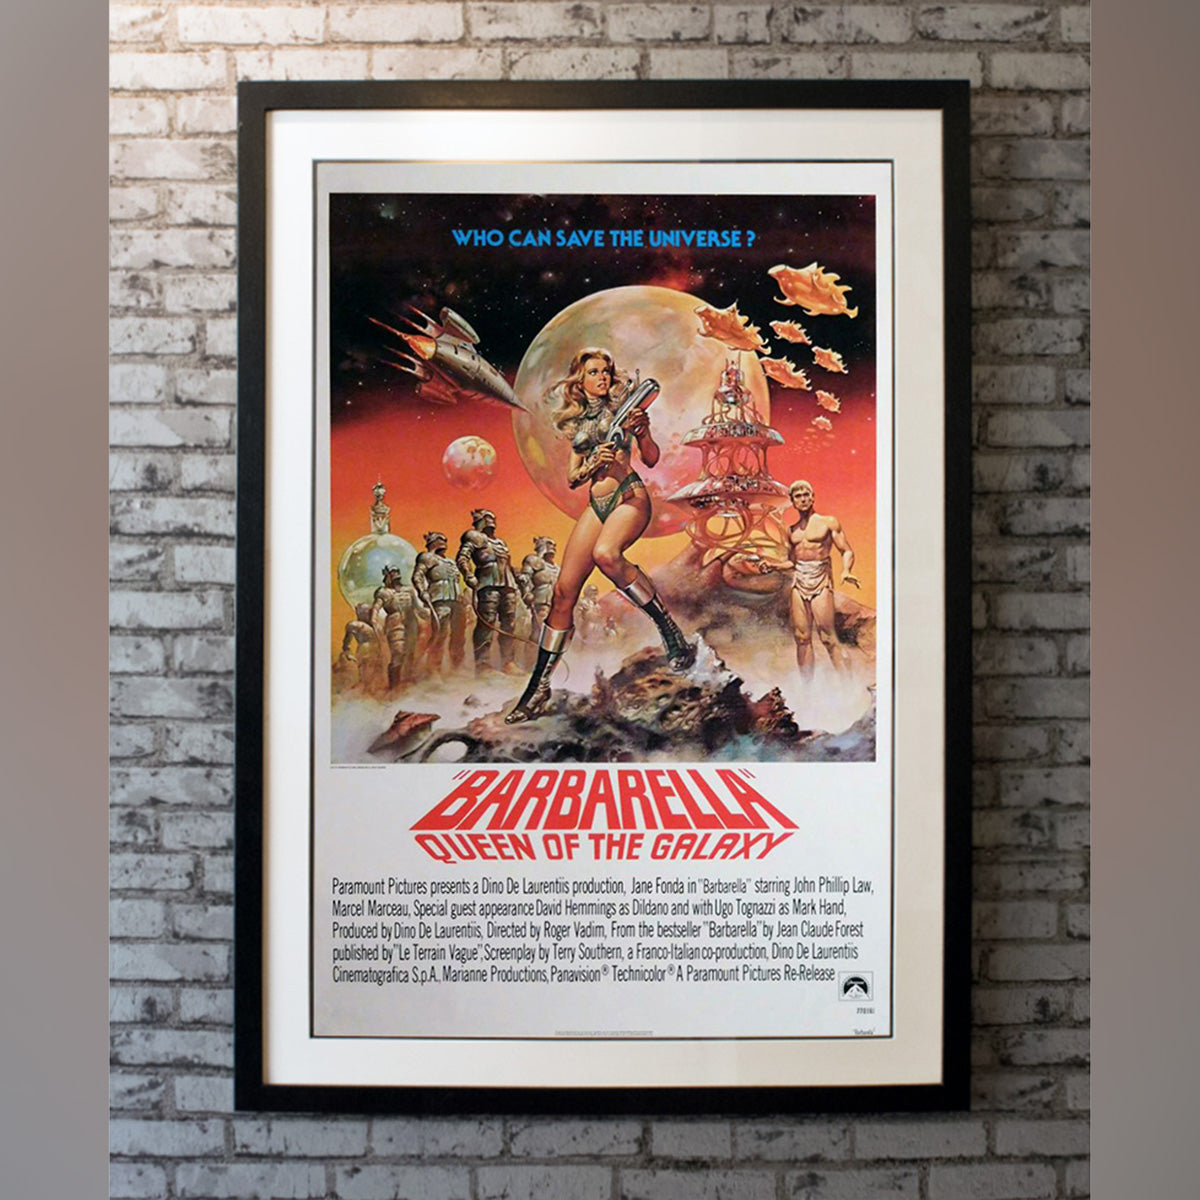 Original Movie Poster of Barbarella (1977R)